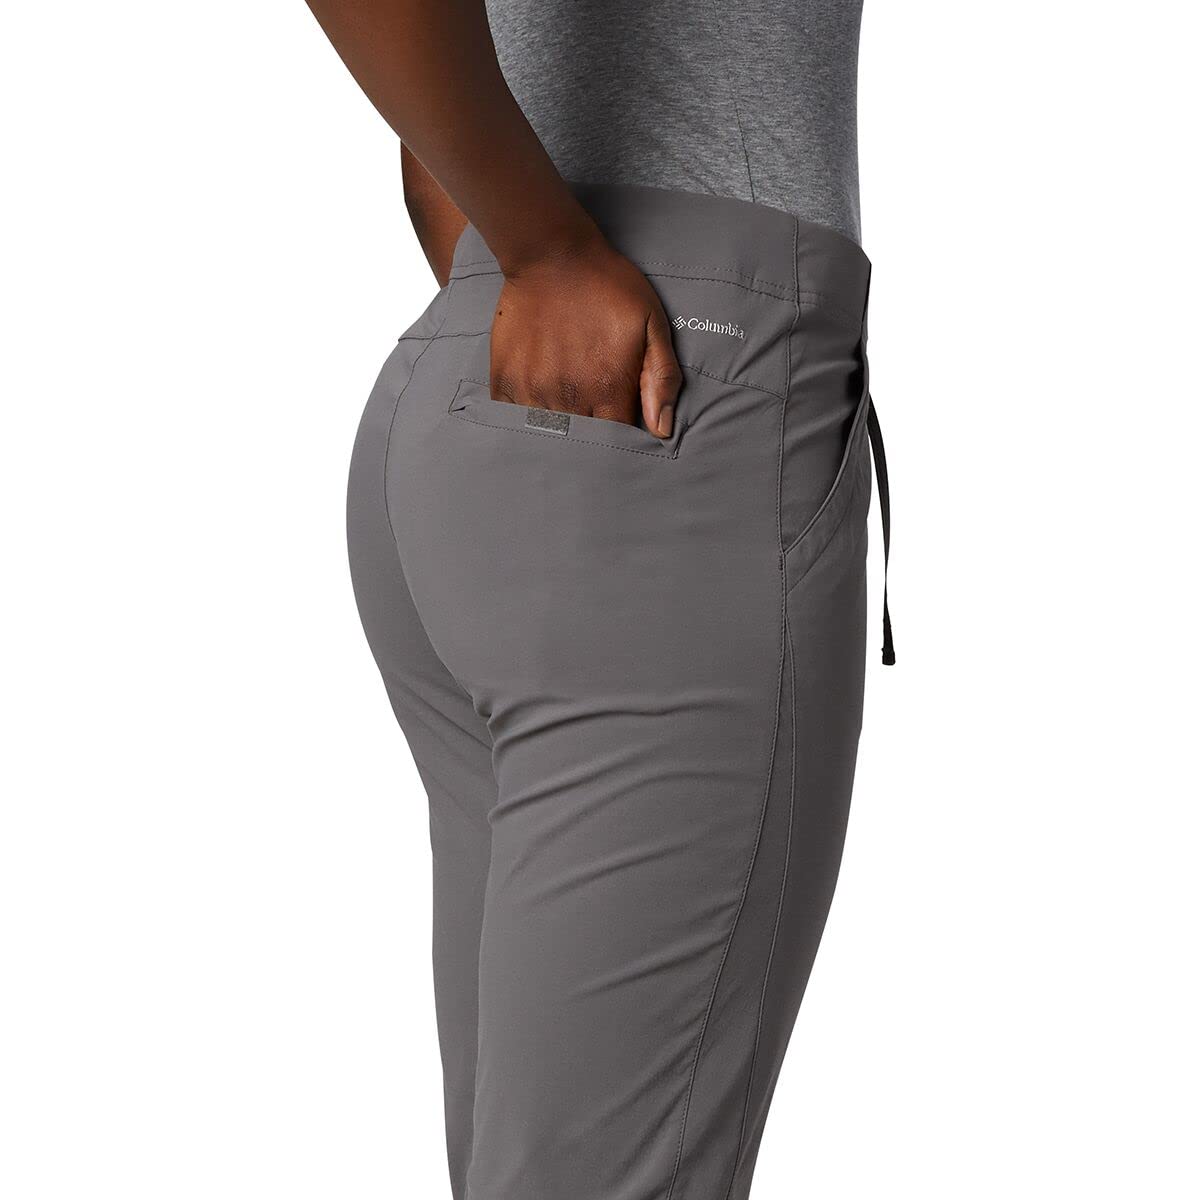 Columbia Women's Anytime Outdoor Capri, Water & Stain Repellent Pants, City Grey, 12x18